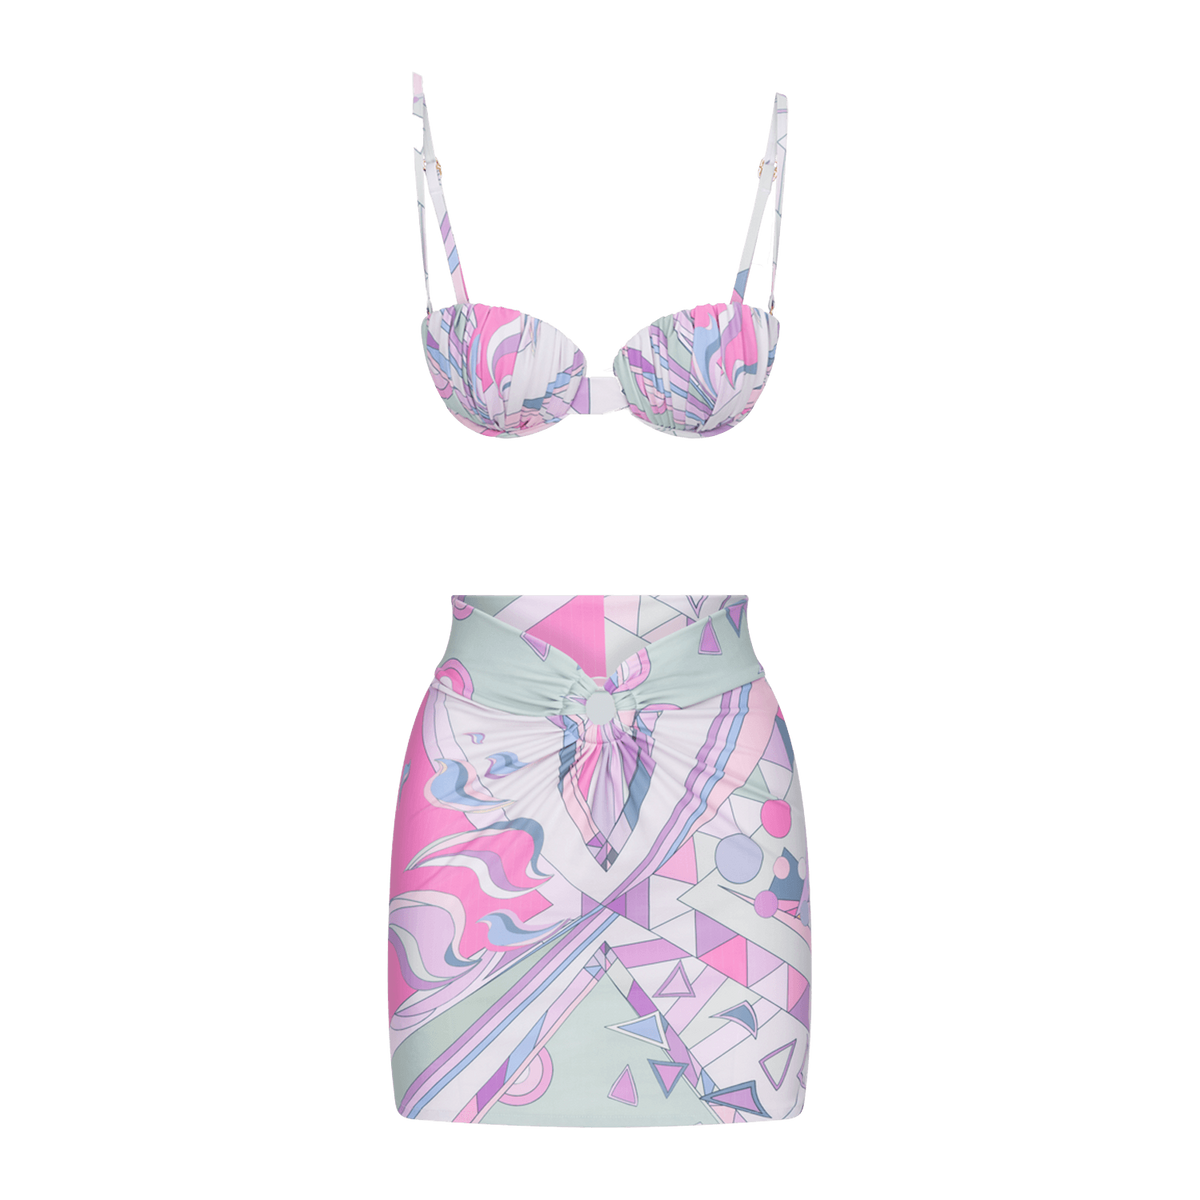 pucci inspired abstract print in bikini top and mini skirt set